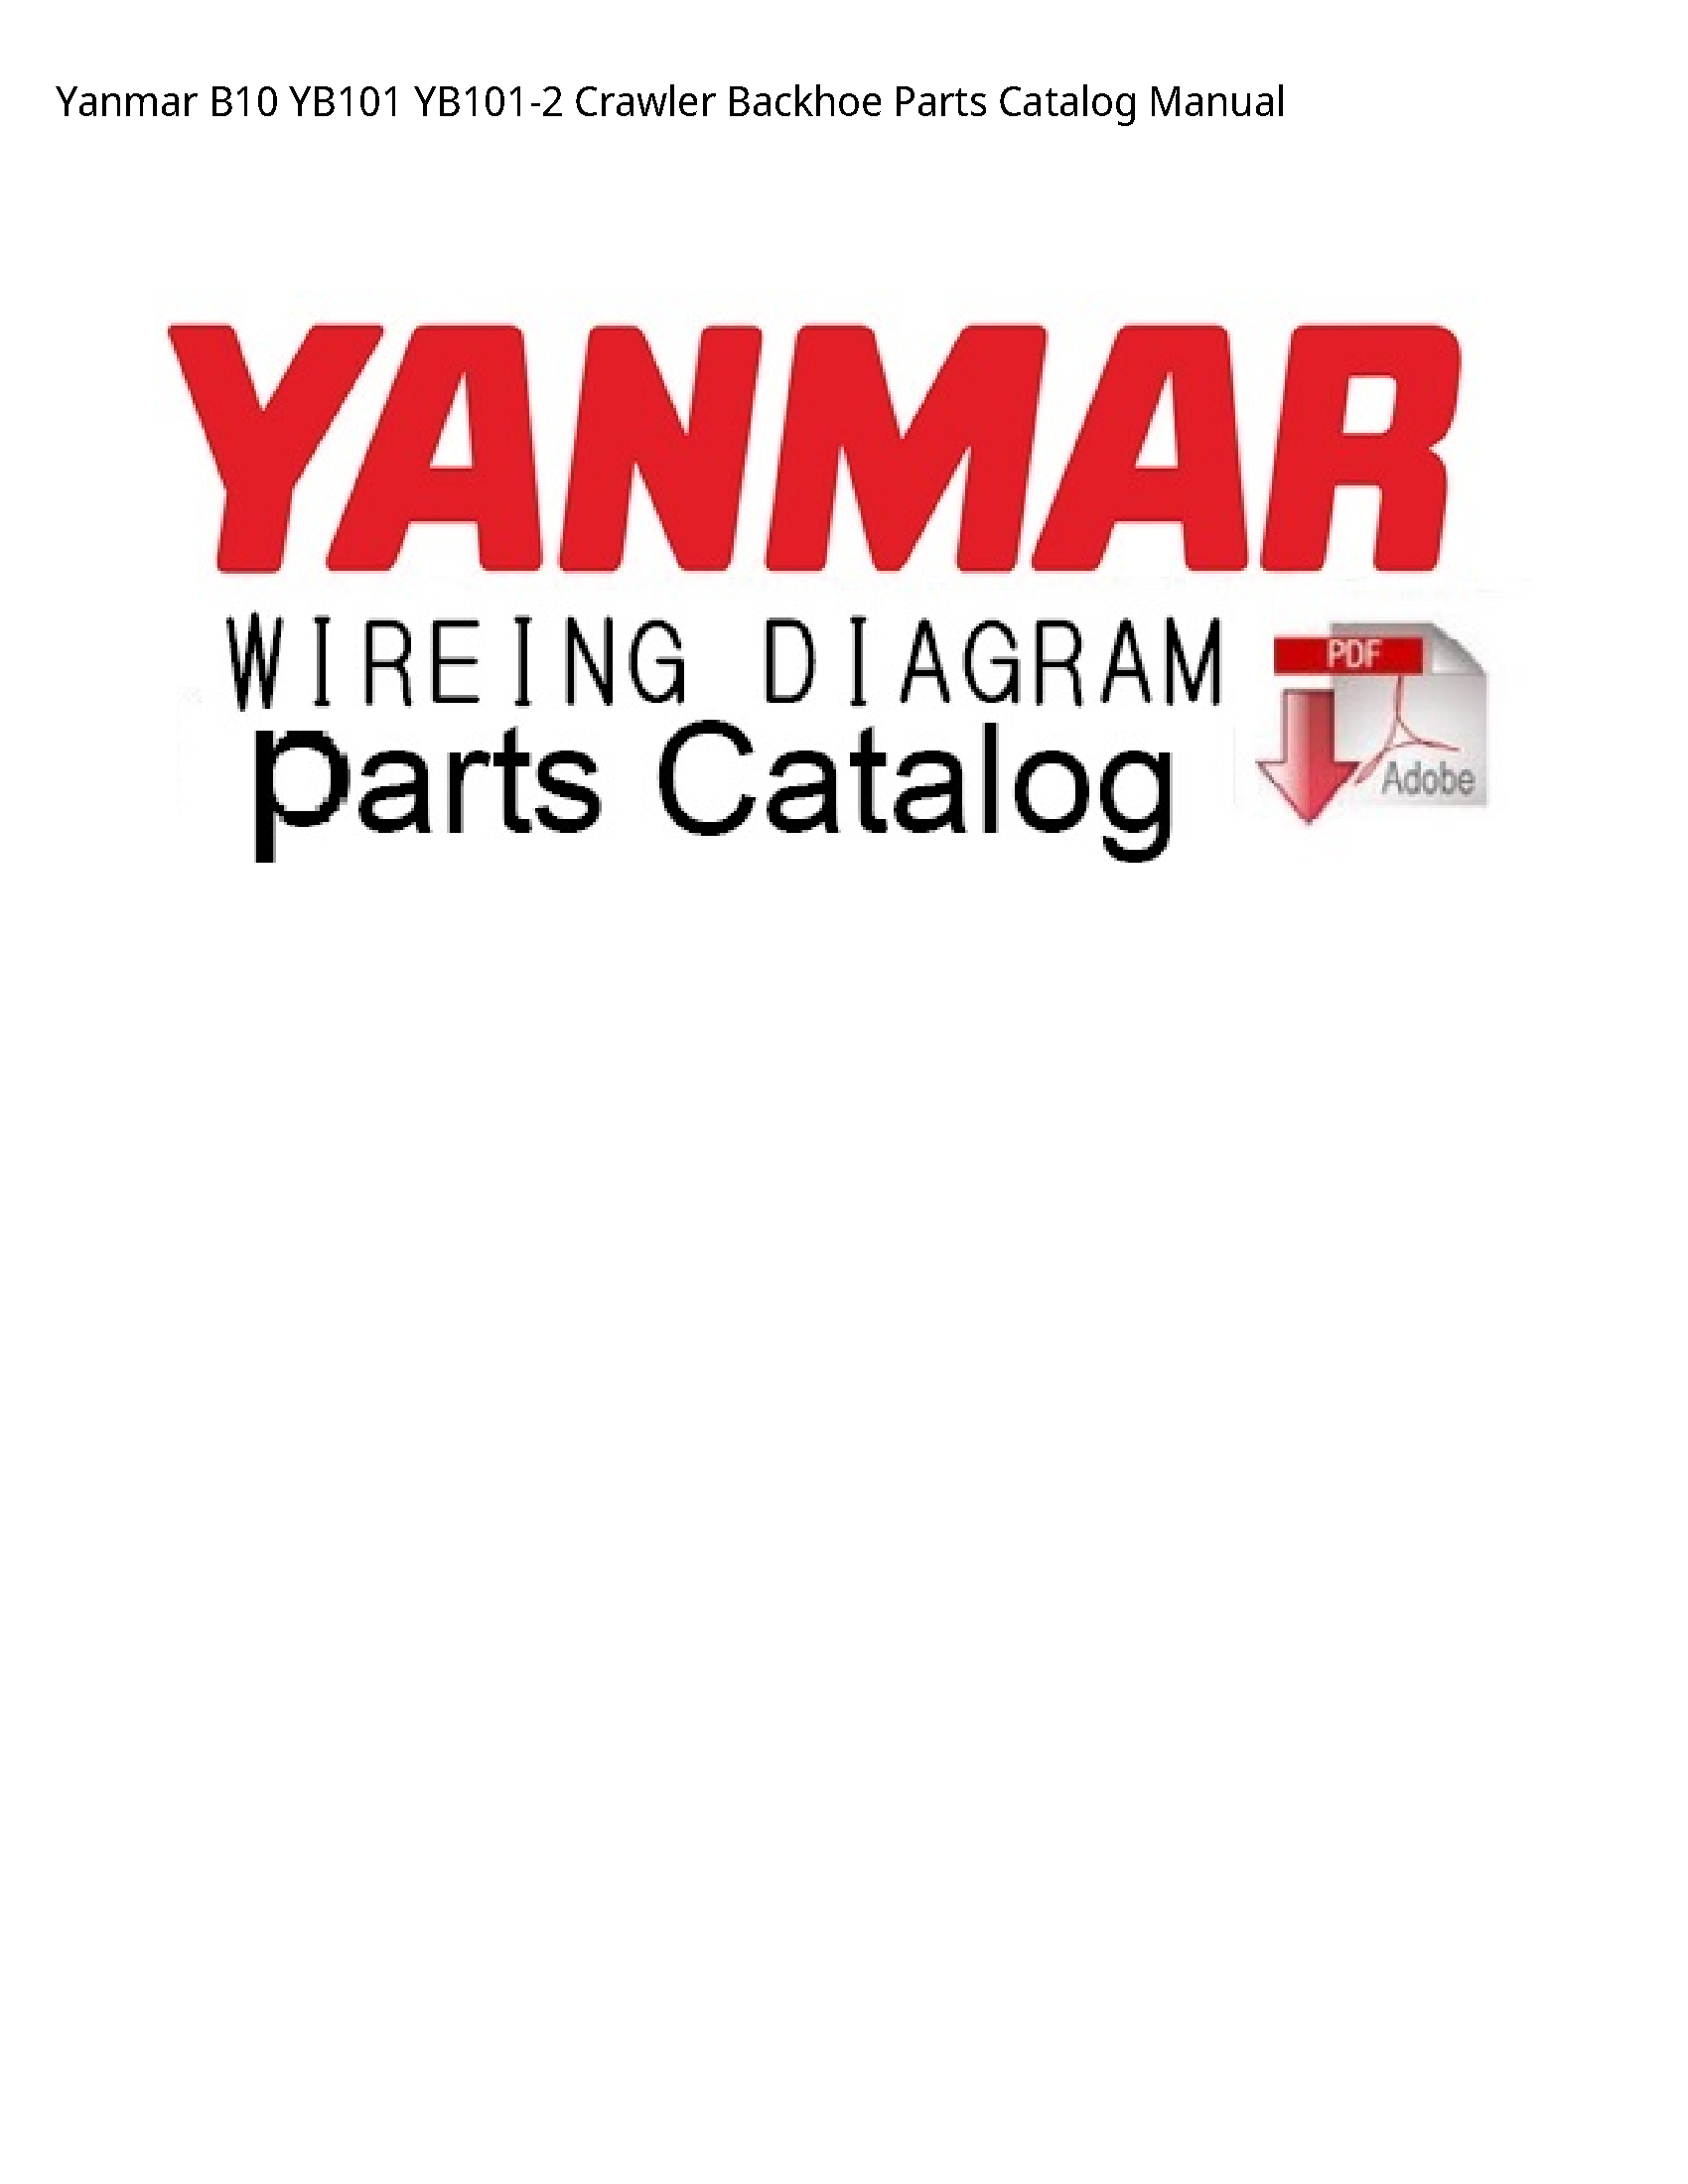 Yanmar B10 Crawler Backhoe Parts Catalog manual